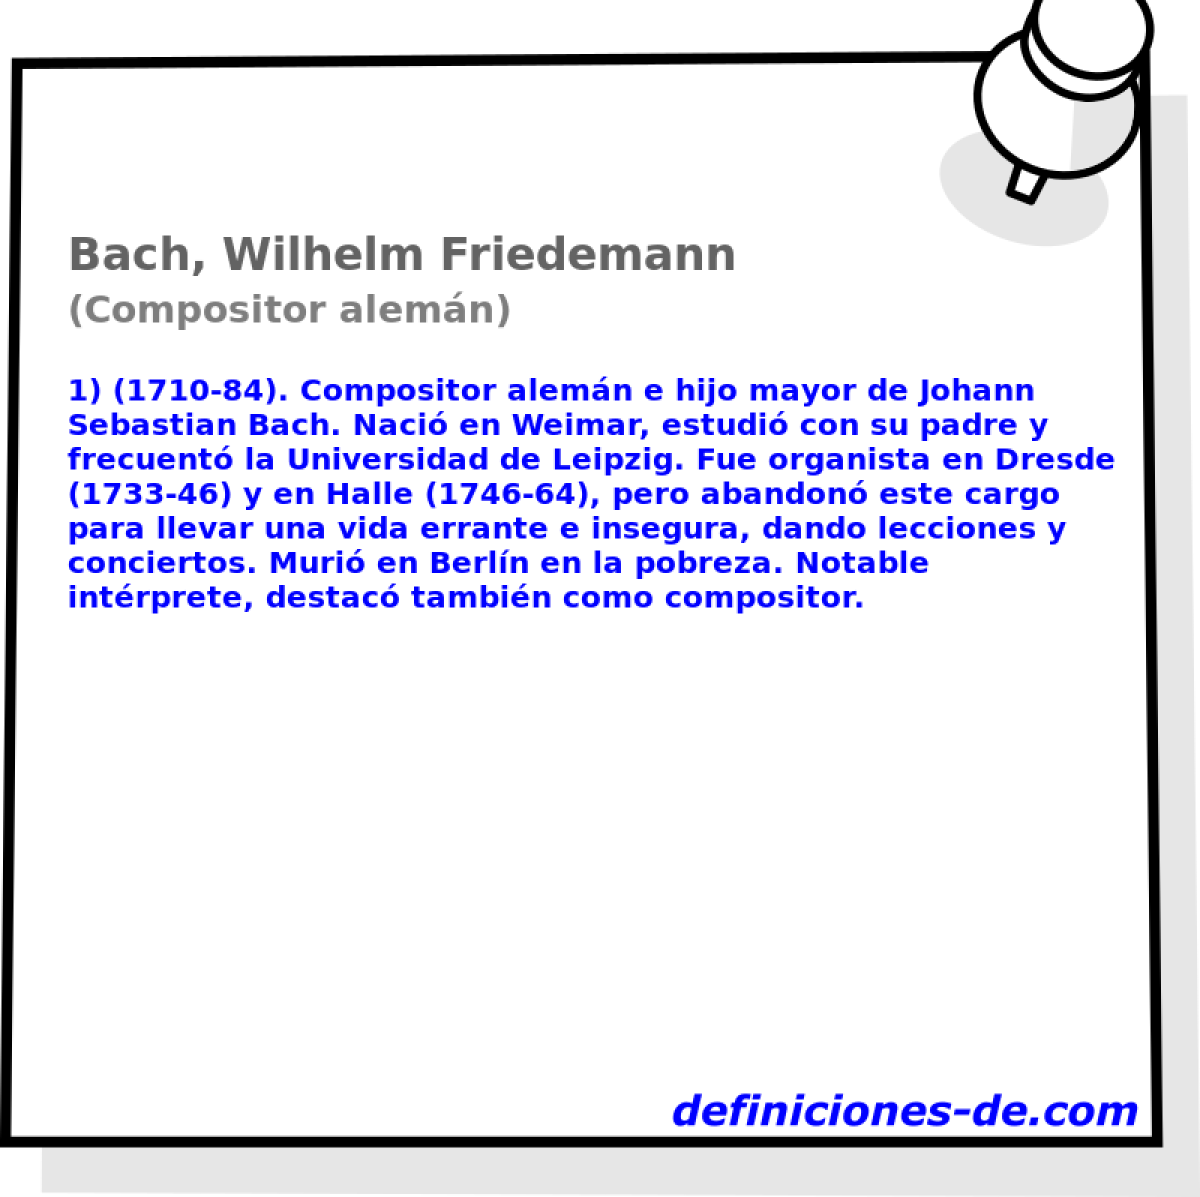 Bach, Wilhelm Friedemann (Compositor alemn)